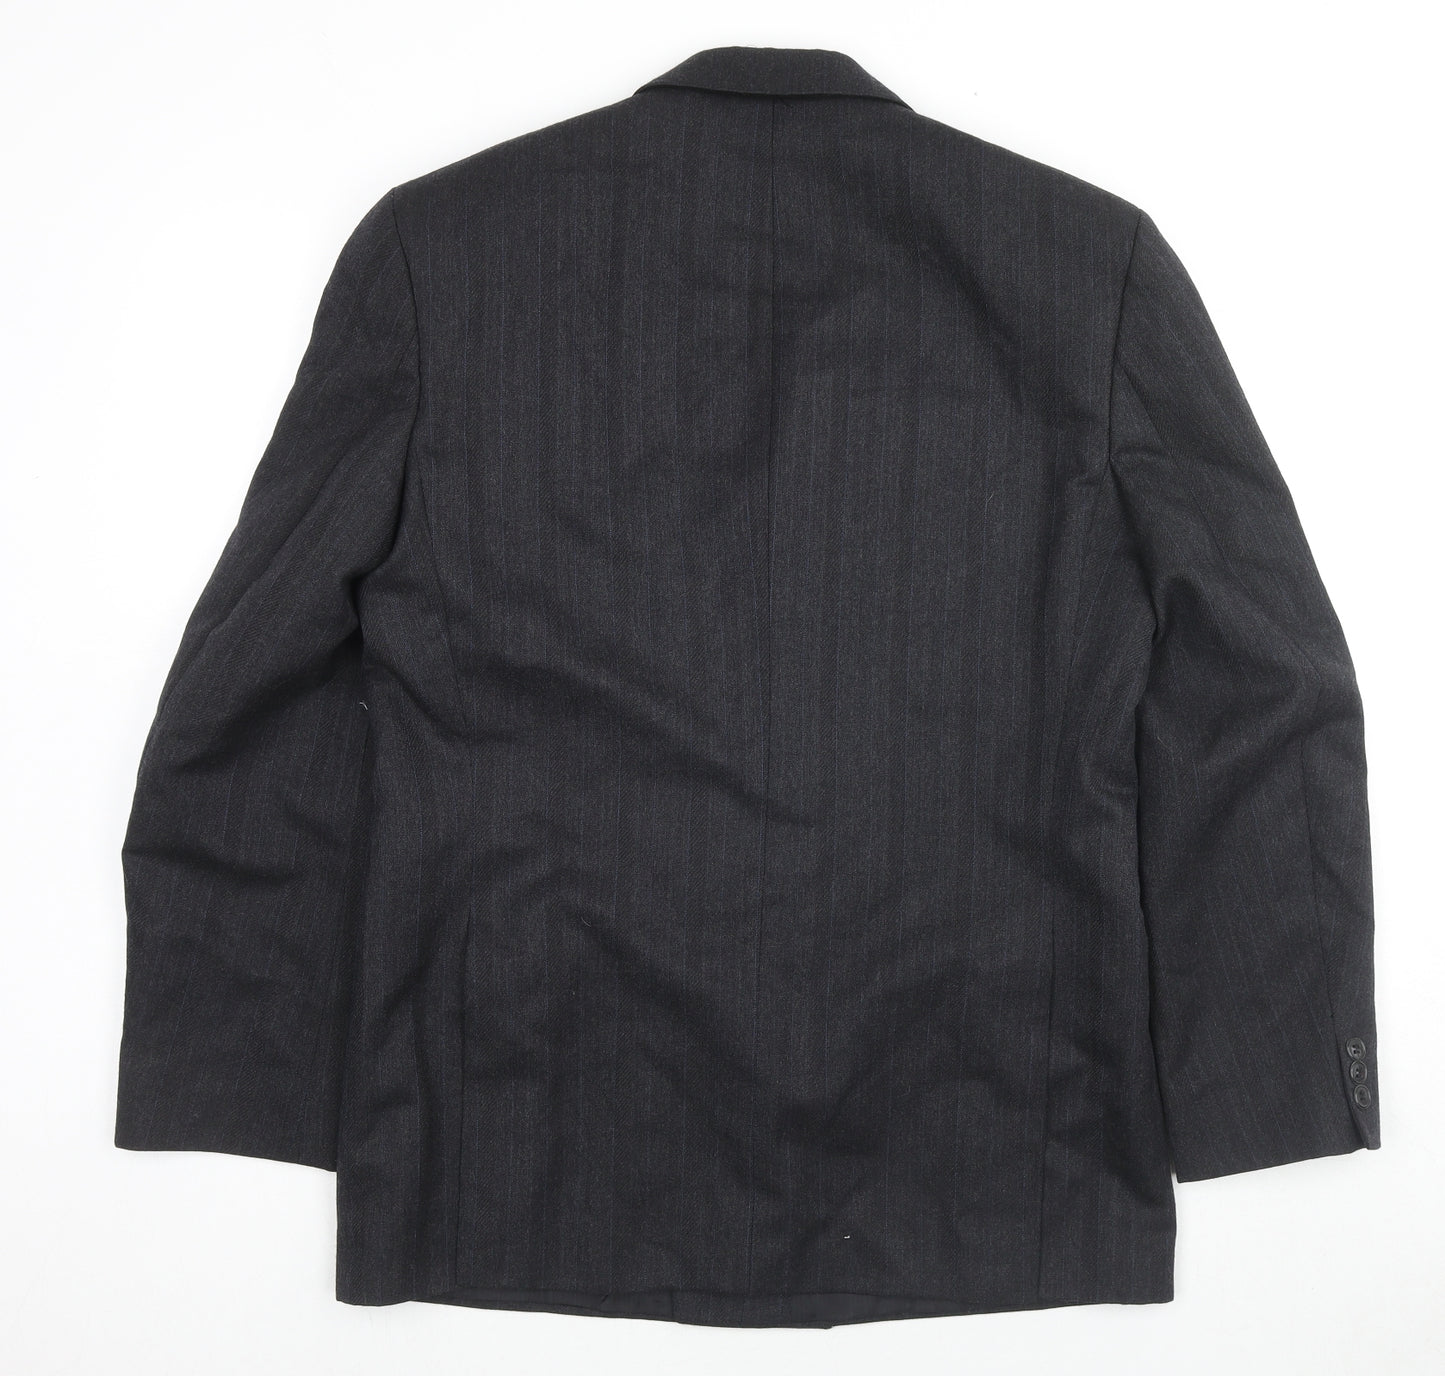 St Michael Mens Black Striped Polyester Jacket Suit Jacket Size 38 Regular